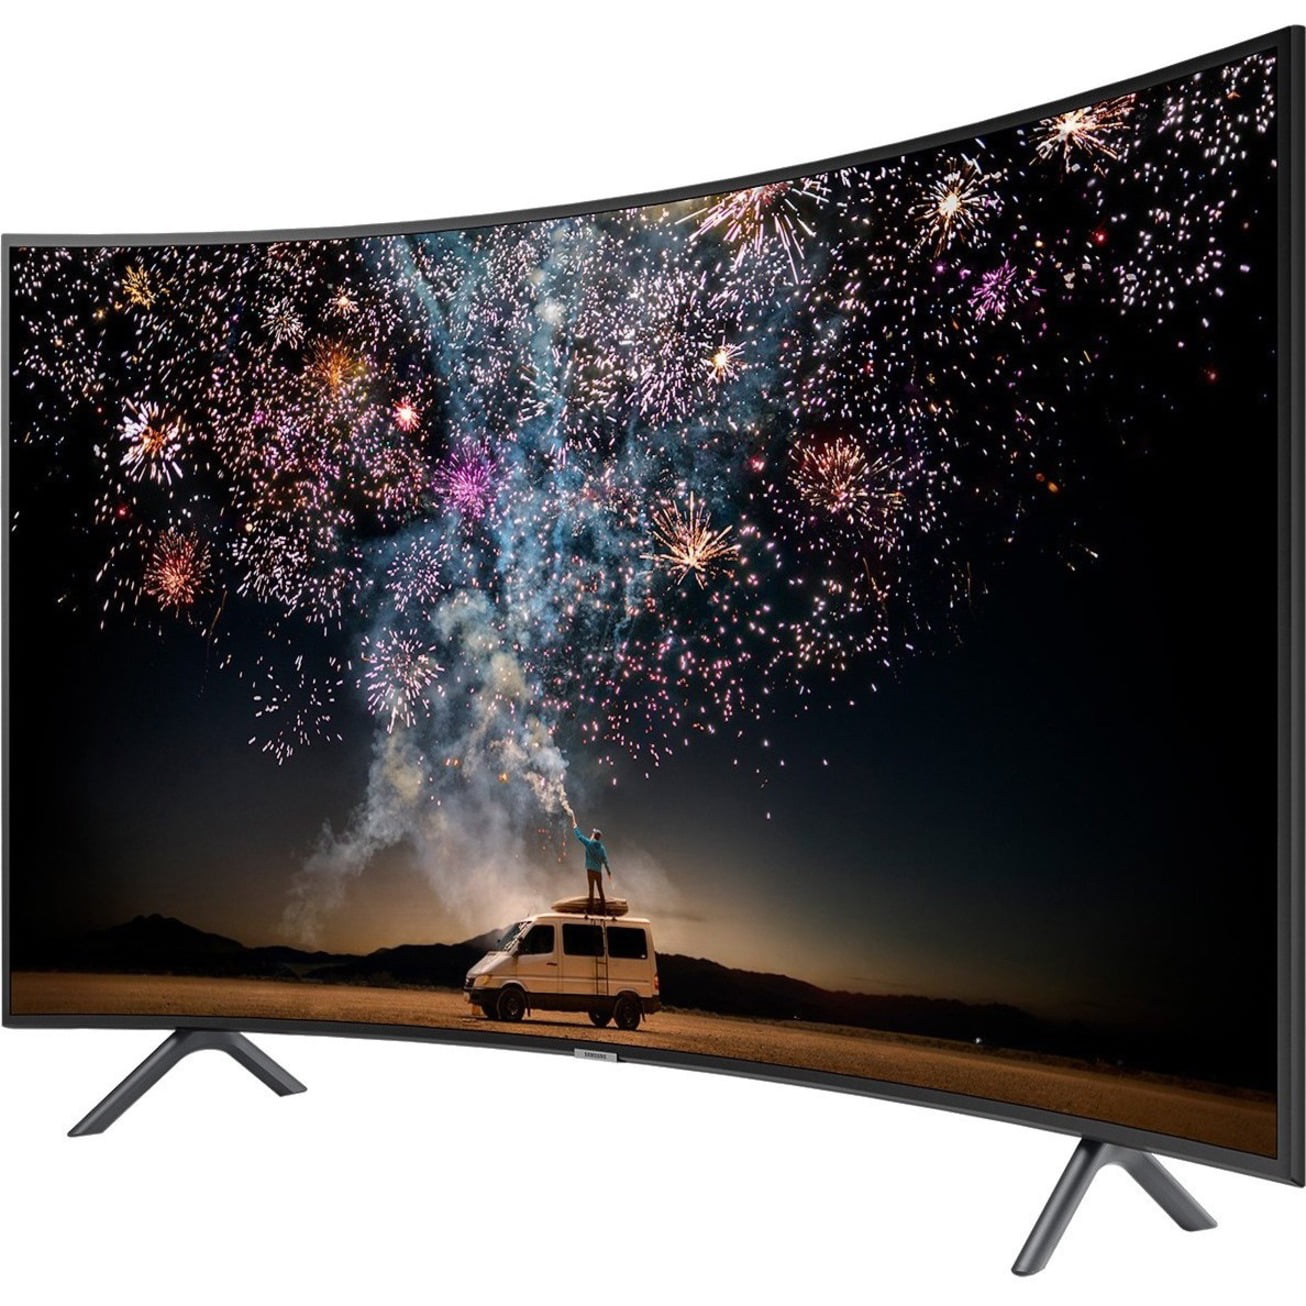 vinde Gooey Uventet Samsung 65" Class 4K UHDTV (2160p) HDR Smart LED-LCD TV (UN65RU7300F) -  Walmart.com